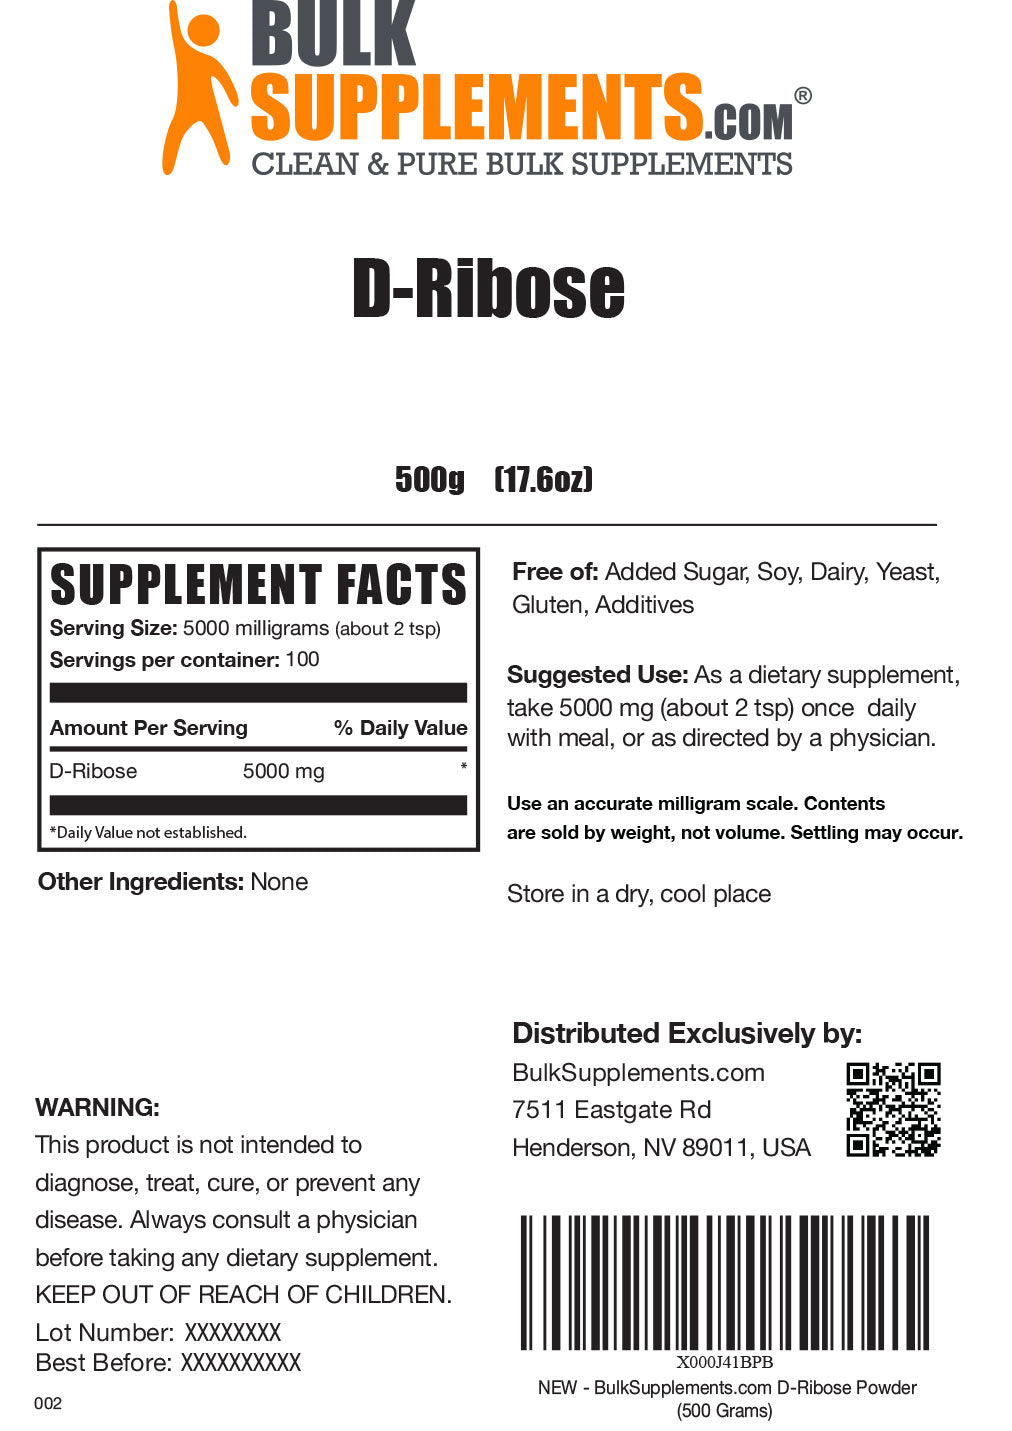 D-Ribose Powder Label